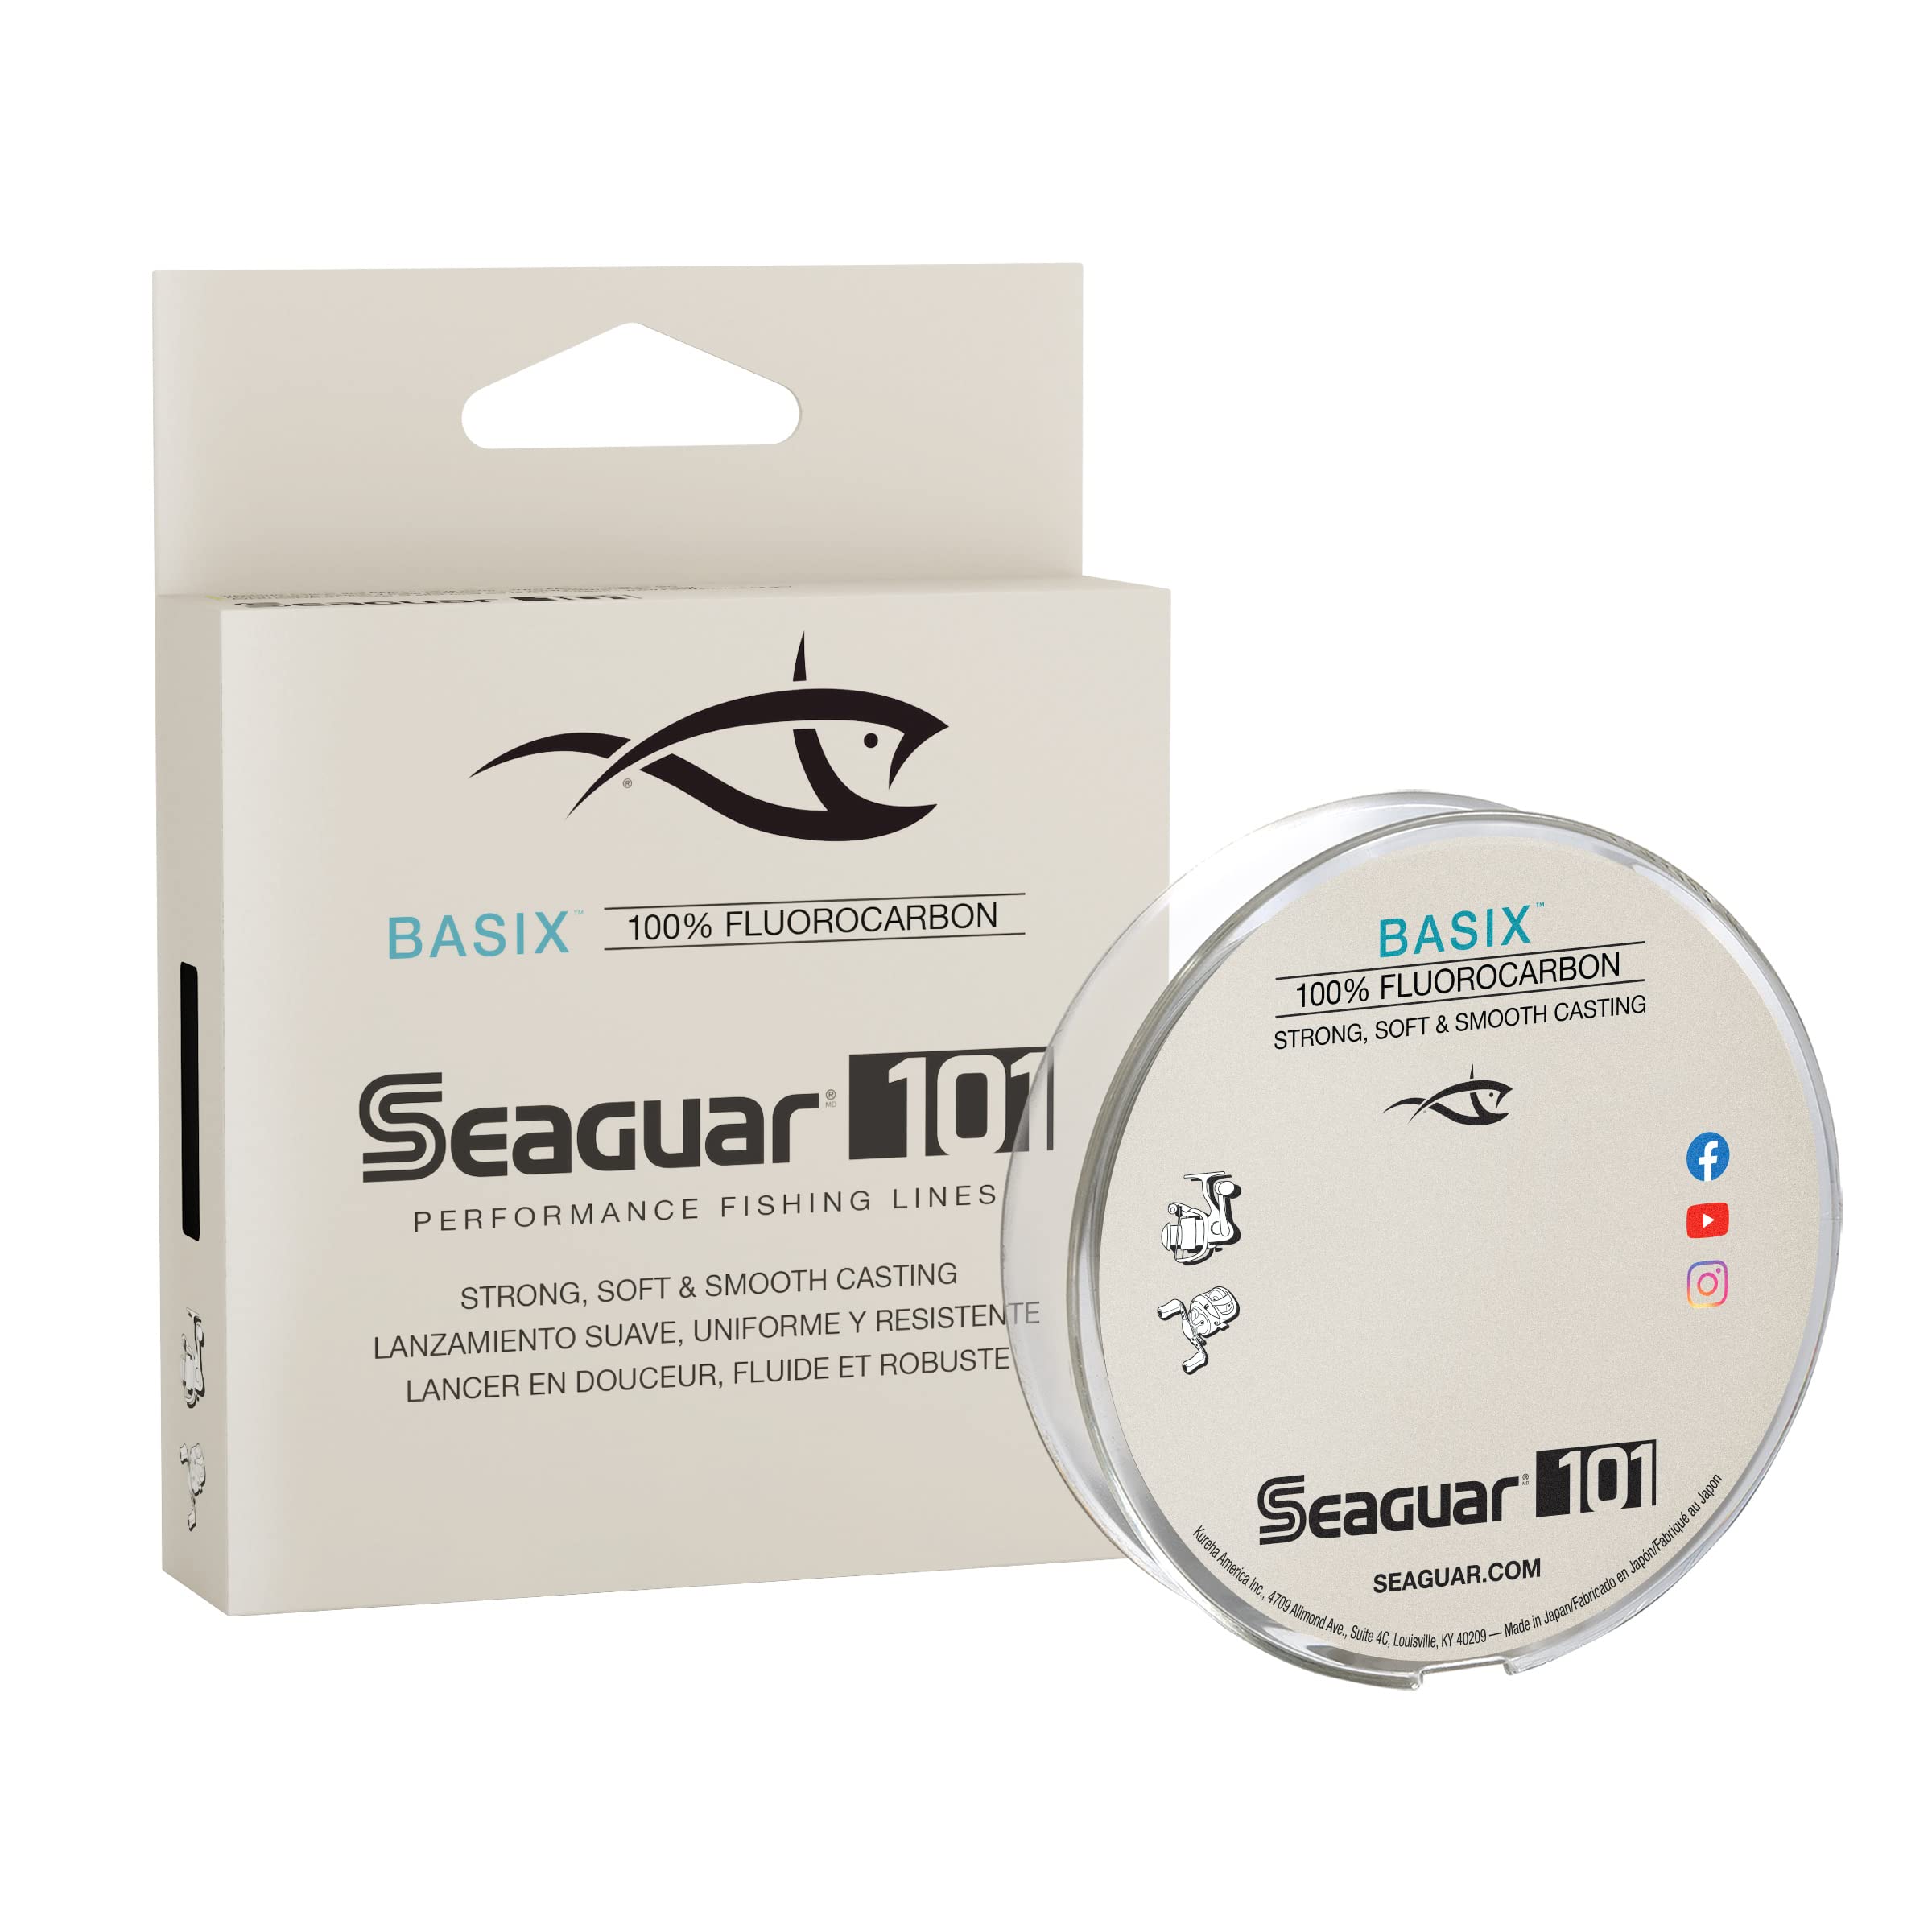 Seaguar 101 Basix 100% Fluorocarbon Fishing Line, Clear 200-yards/8-pounds